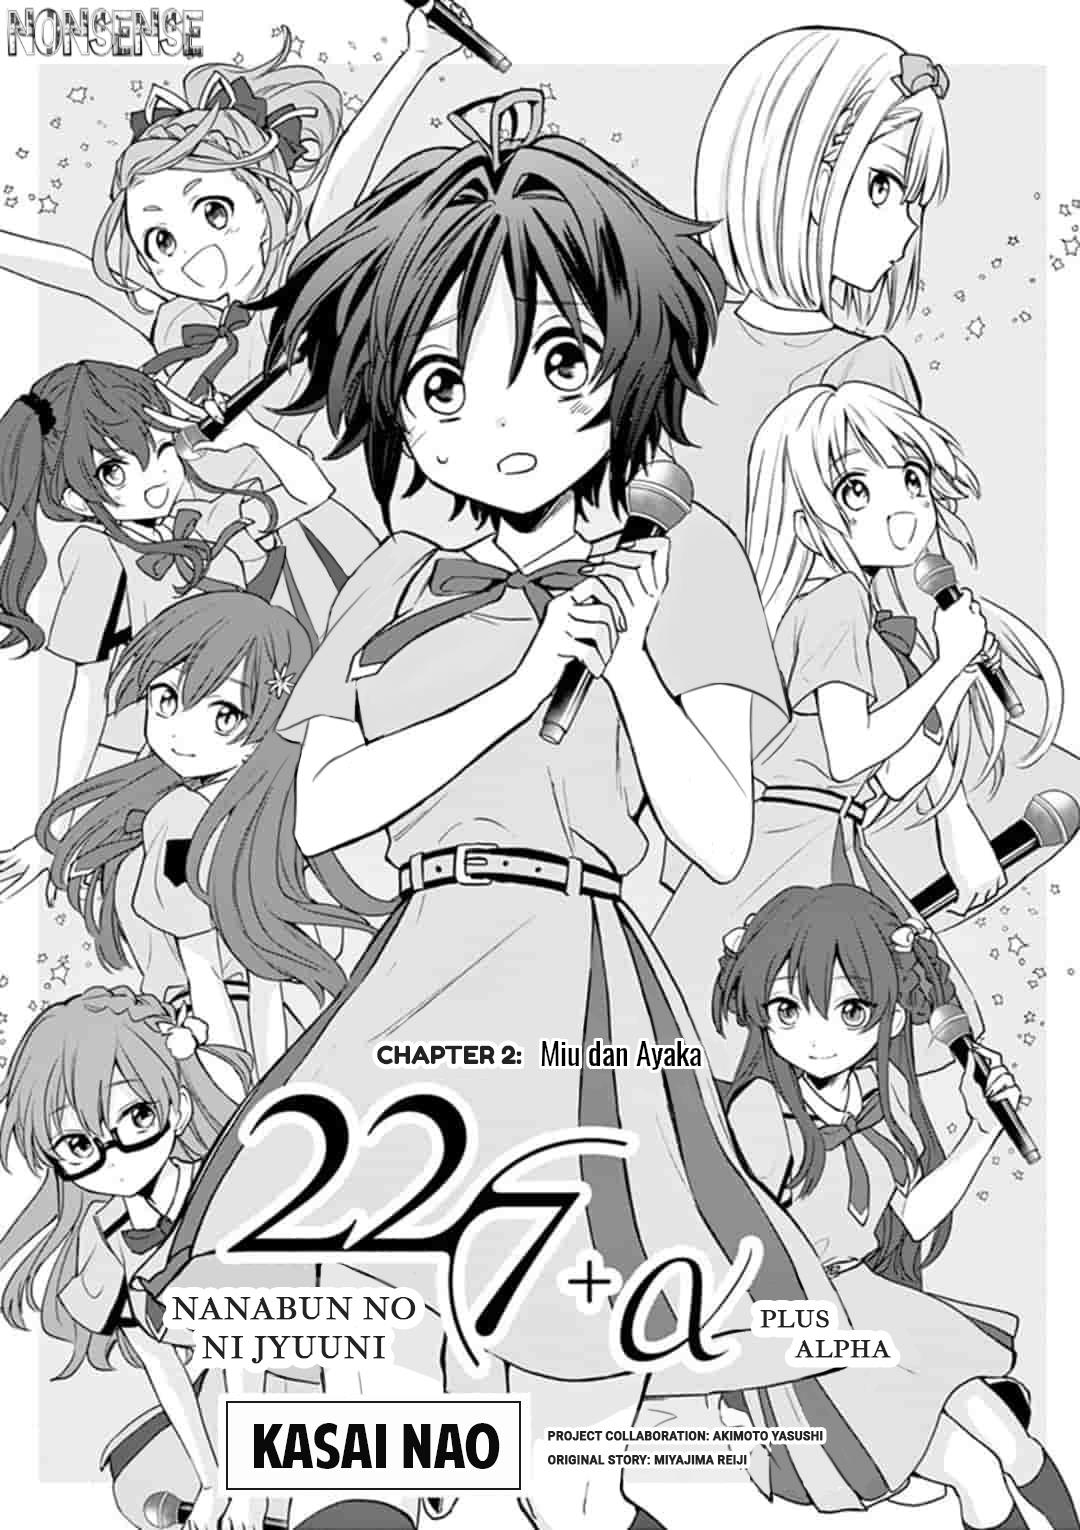 22/7 (Nanabun no Nijyuuni) +α Chapter 2